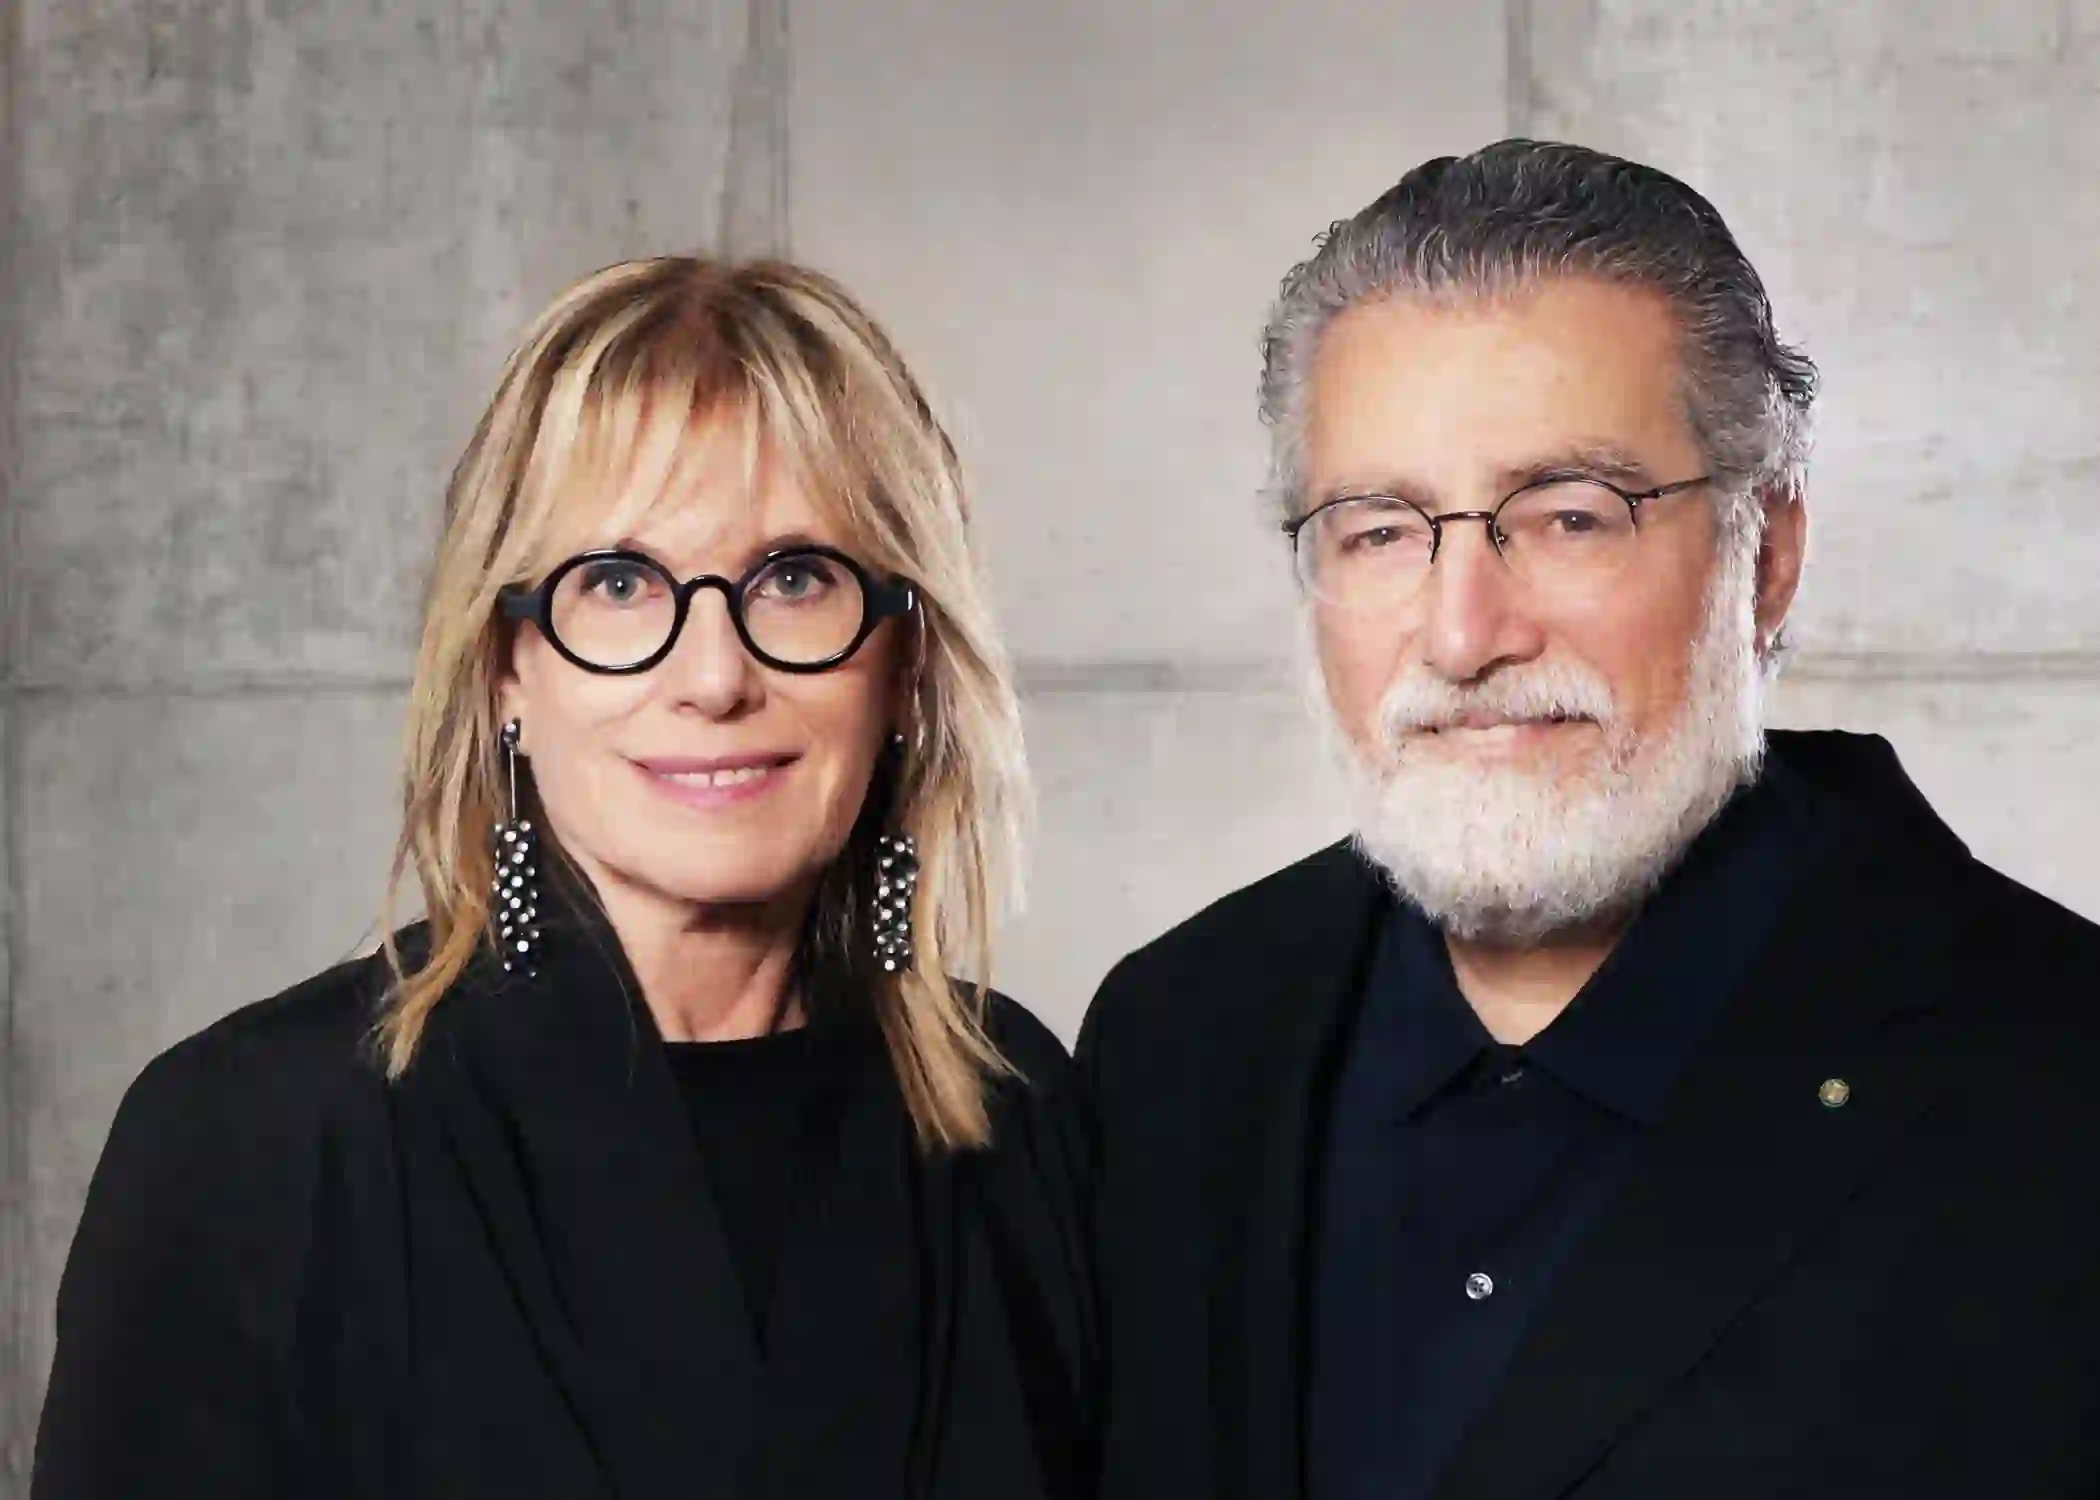 Nancy Olnick and Giorgio Spanu, Co-founders of Magazzino Italian Art. Photo by Marco Anelli